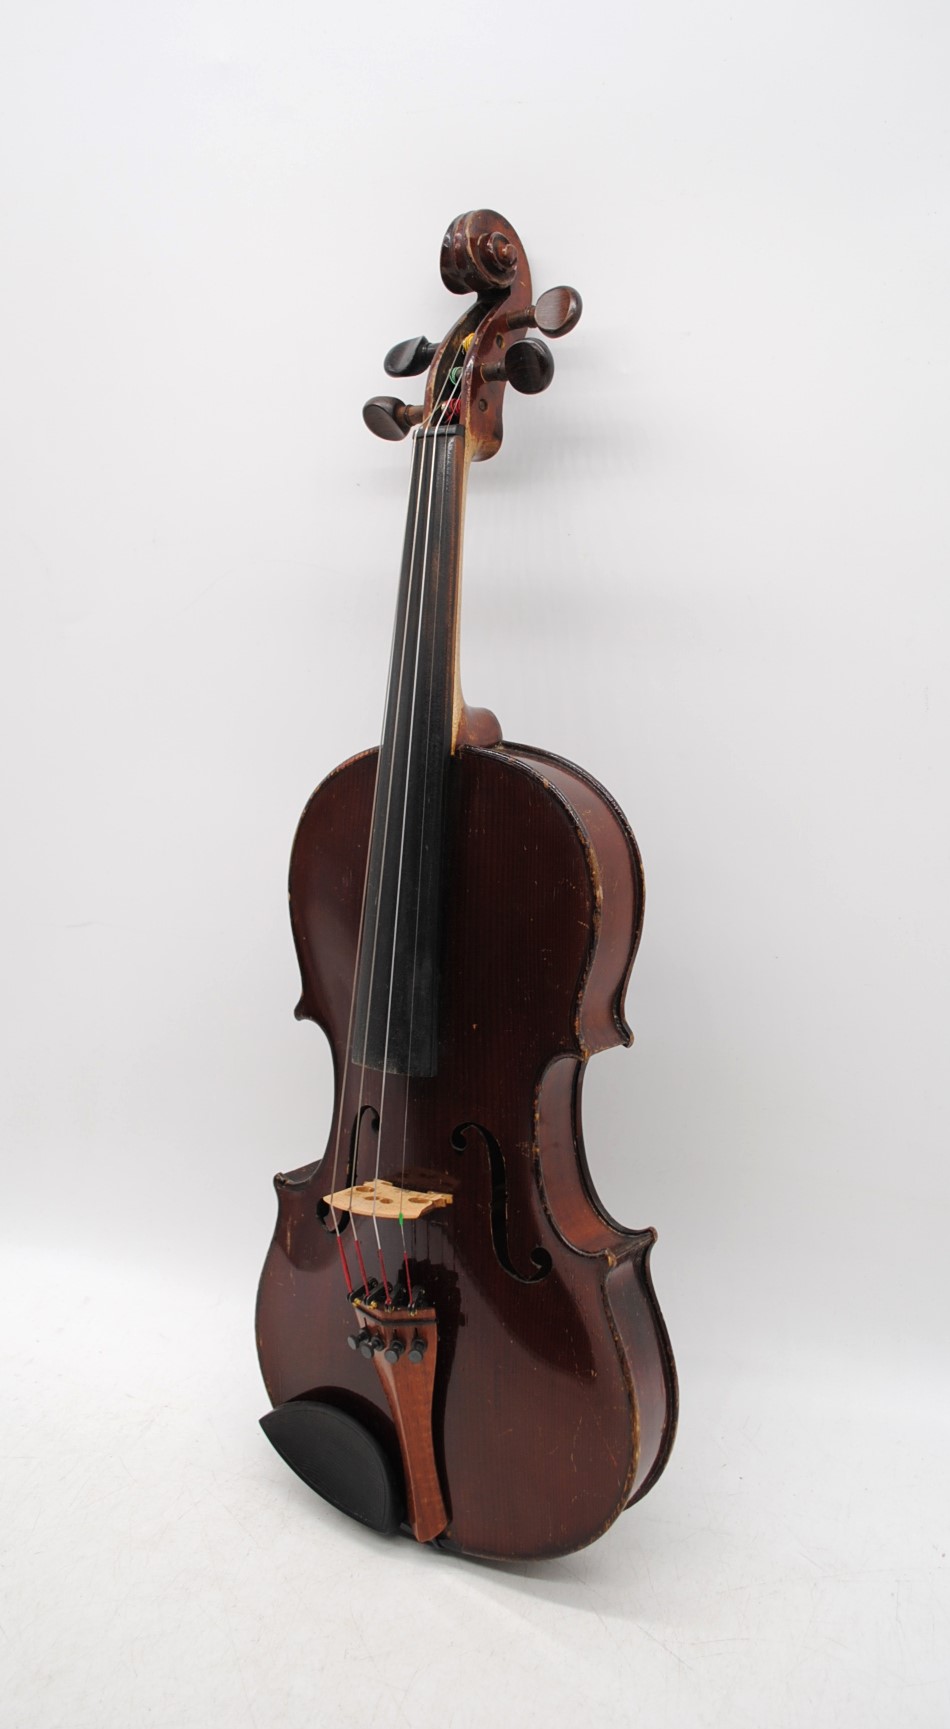 A 3/4 size violin, with Skylark Brand hard case - length of violin 56cm - Image 4 of 12